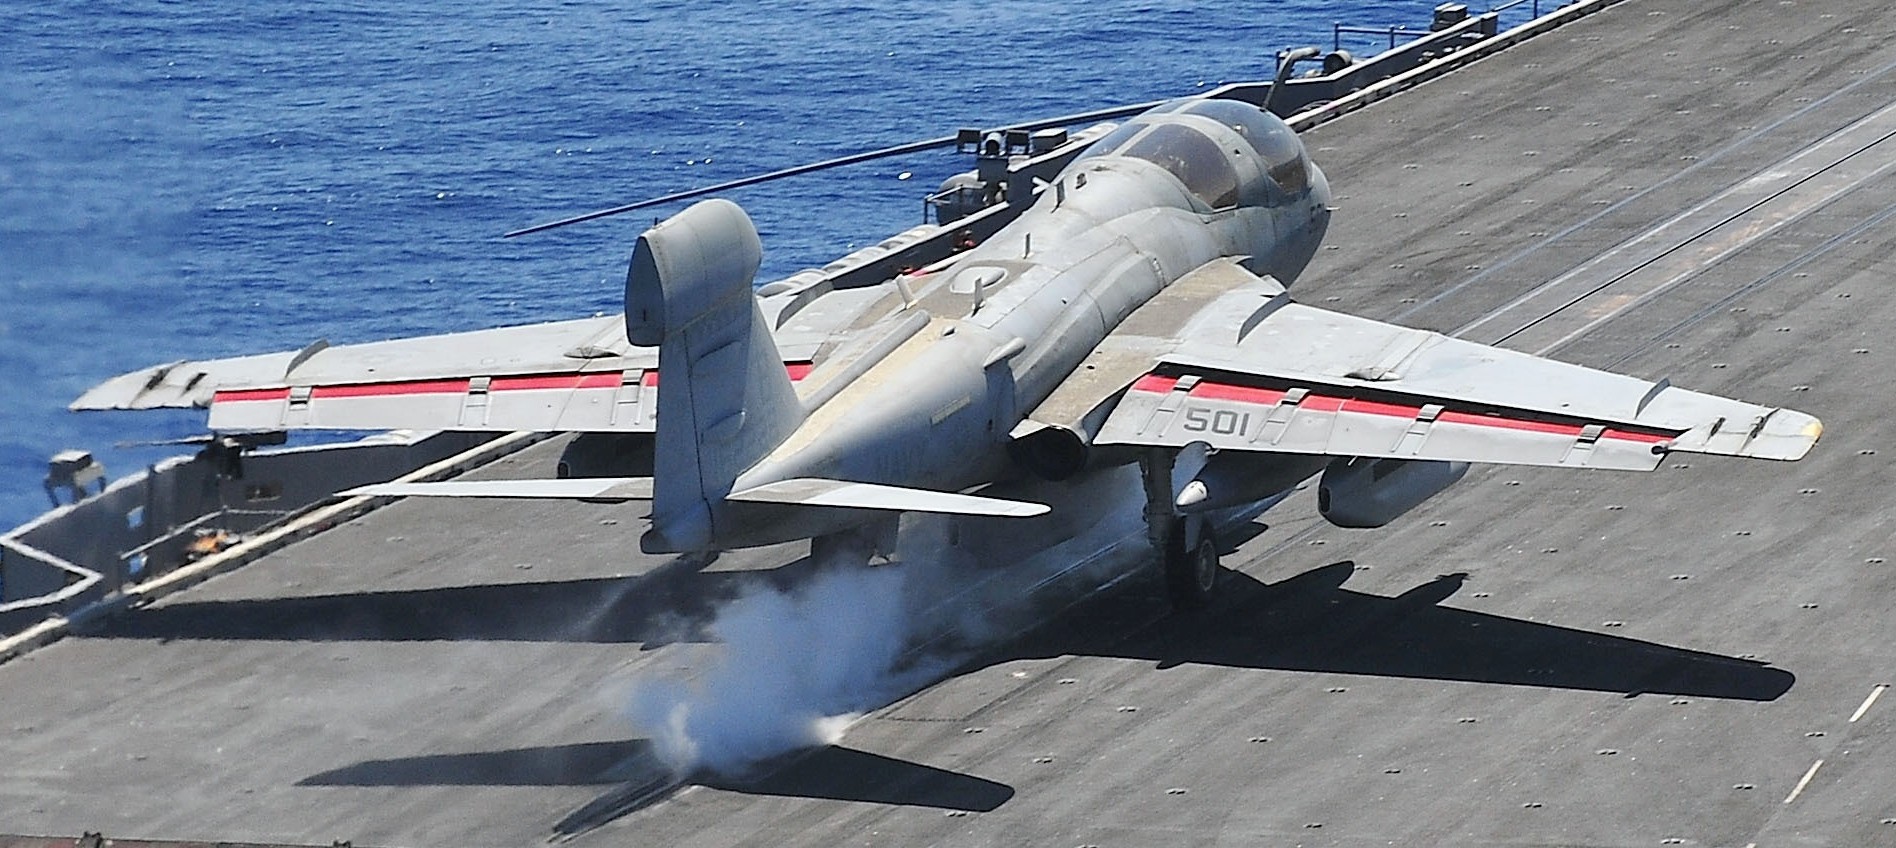 vaq-137 rooks electronic attack squadron us navy ea-6b prowler carrier air wing cvw-1 uss enterprise cvn-65 19